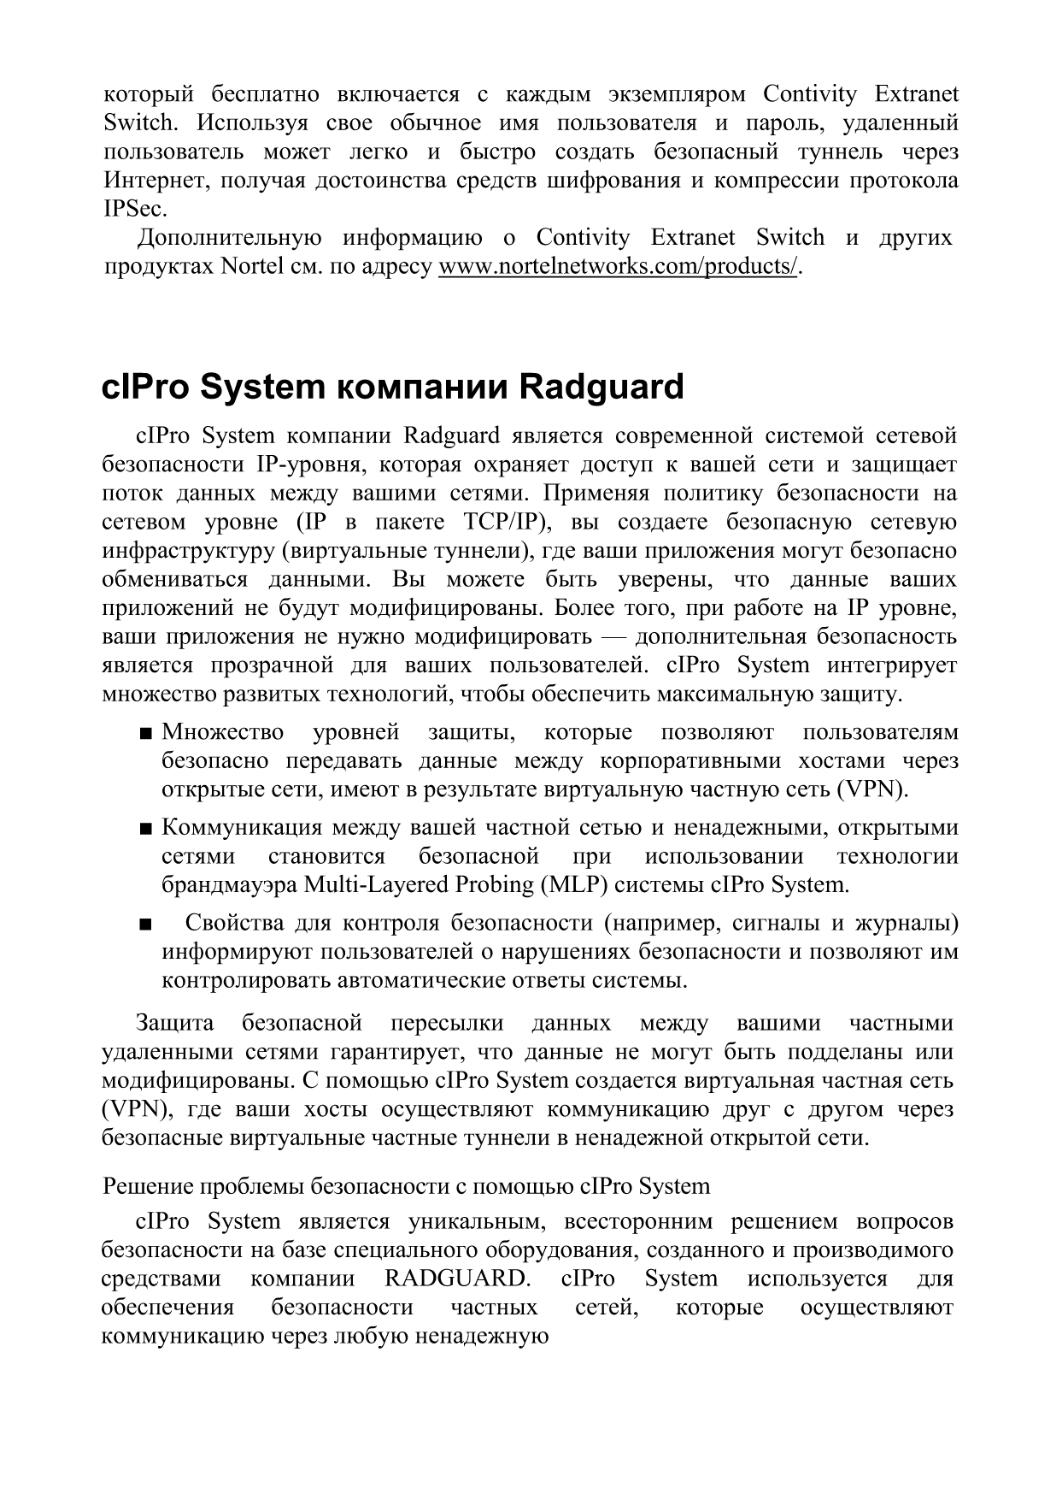 cIPro System компании Radguard